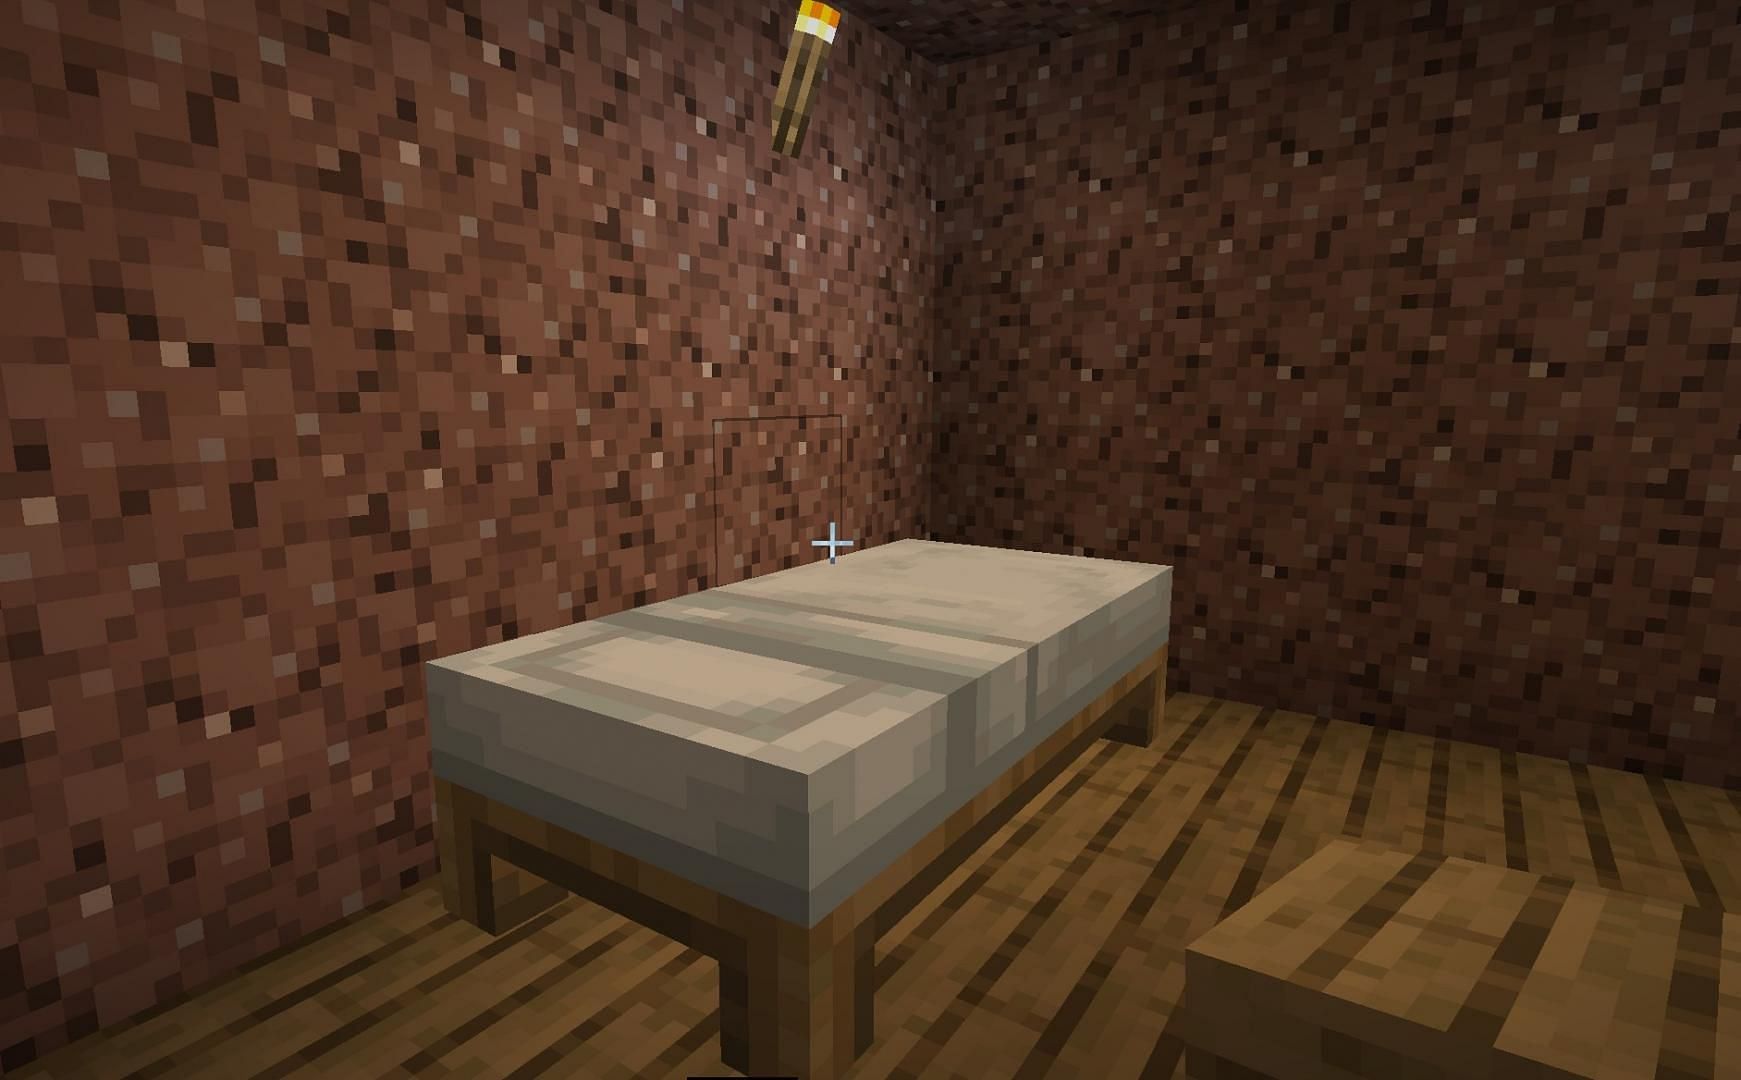 Bed in Minecraft (Image via Gamepur)